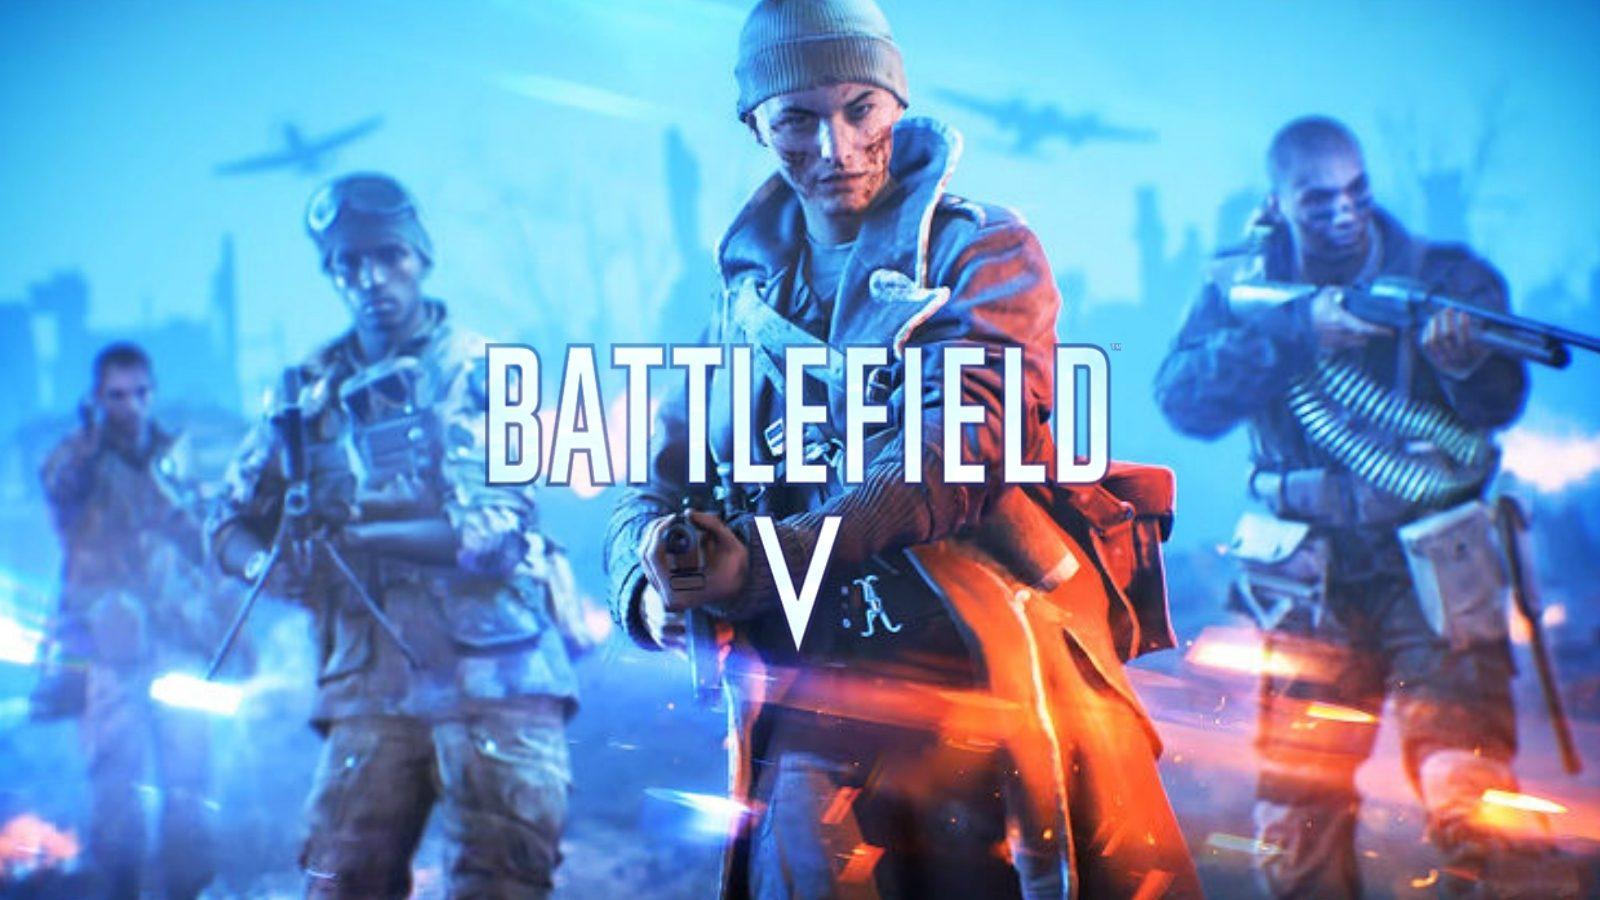 Battlefield V Release Date Delayed